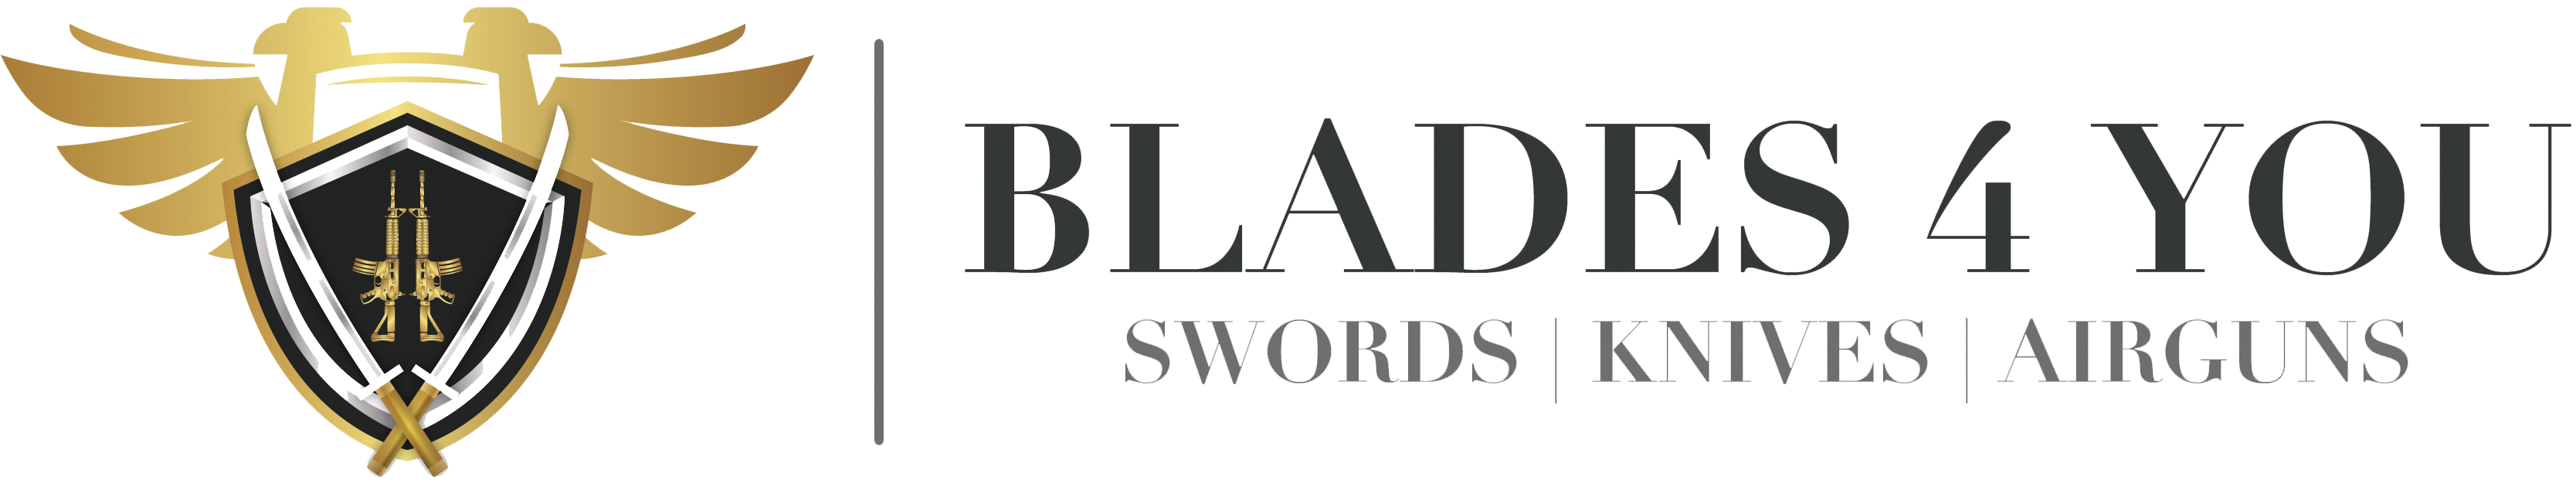 Blades4you